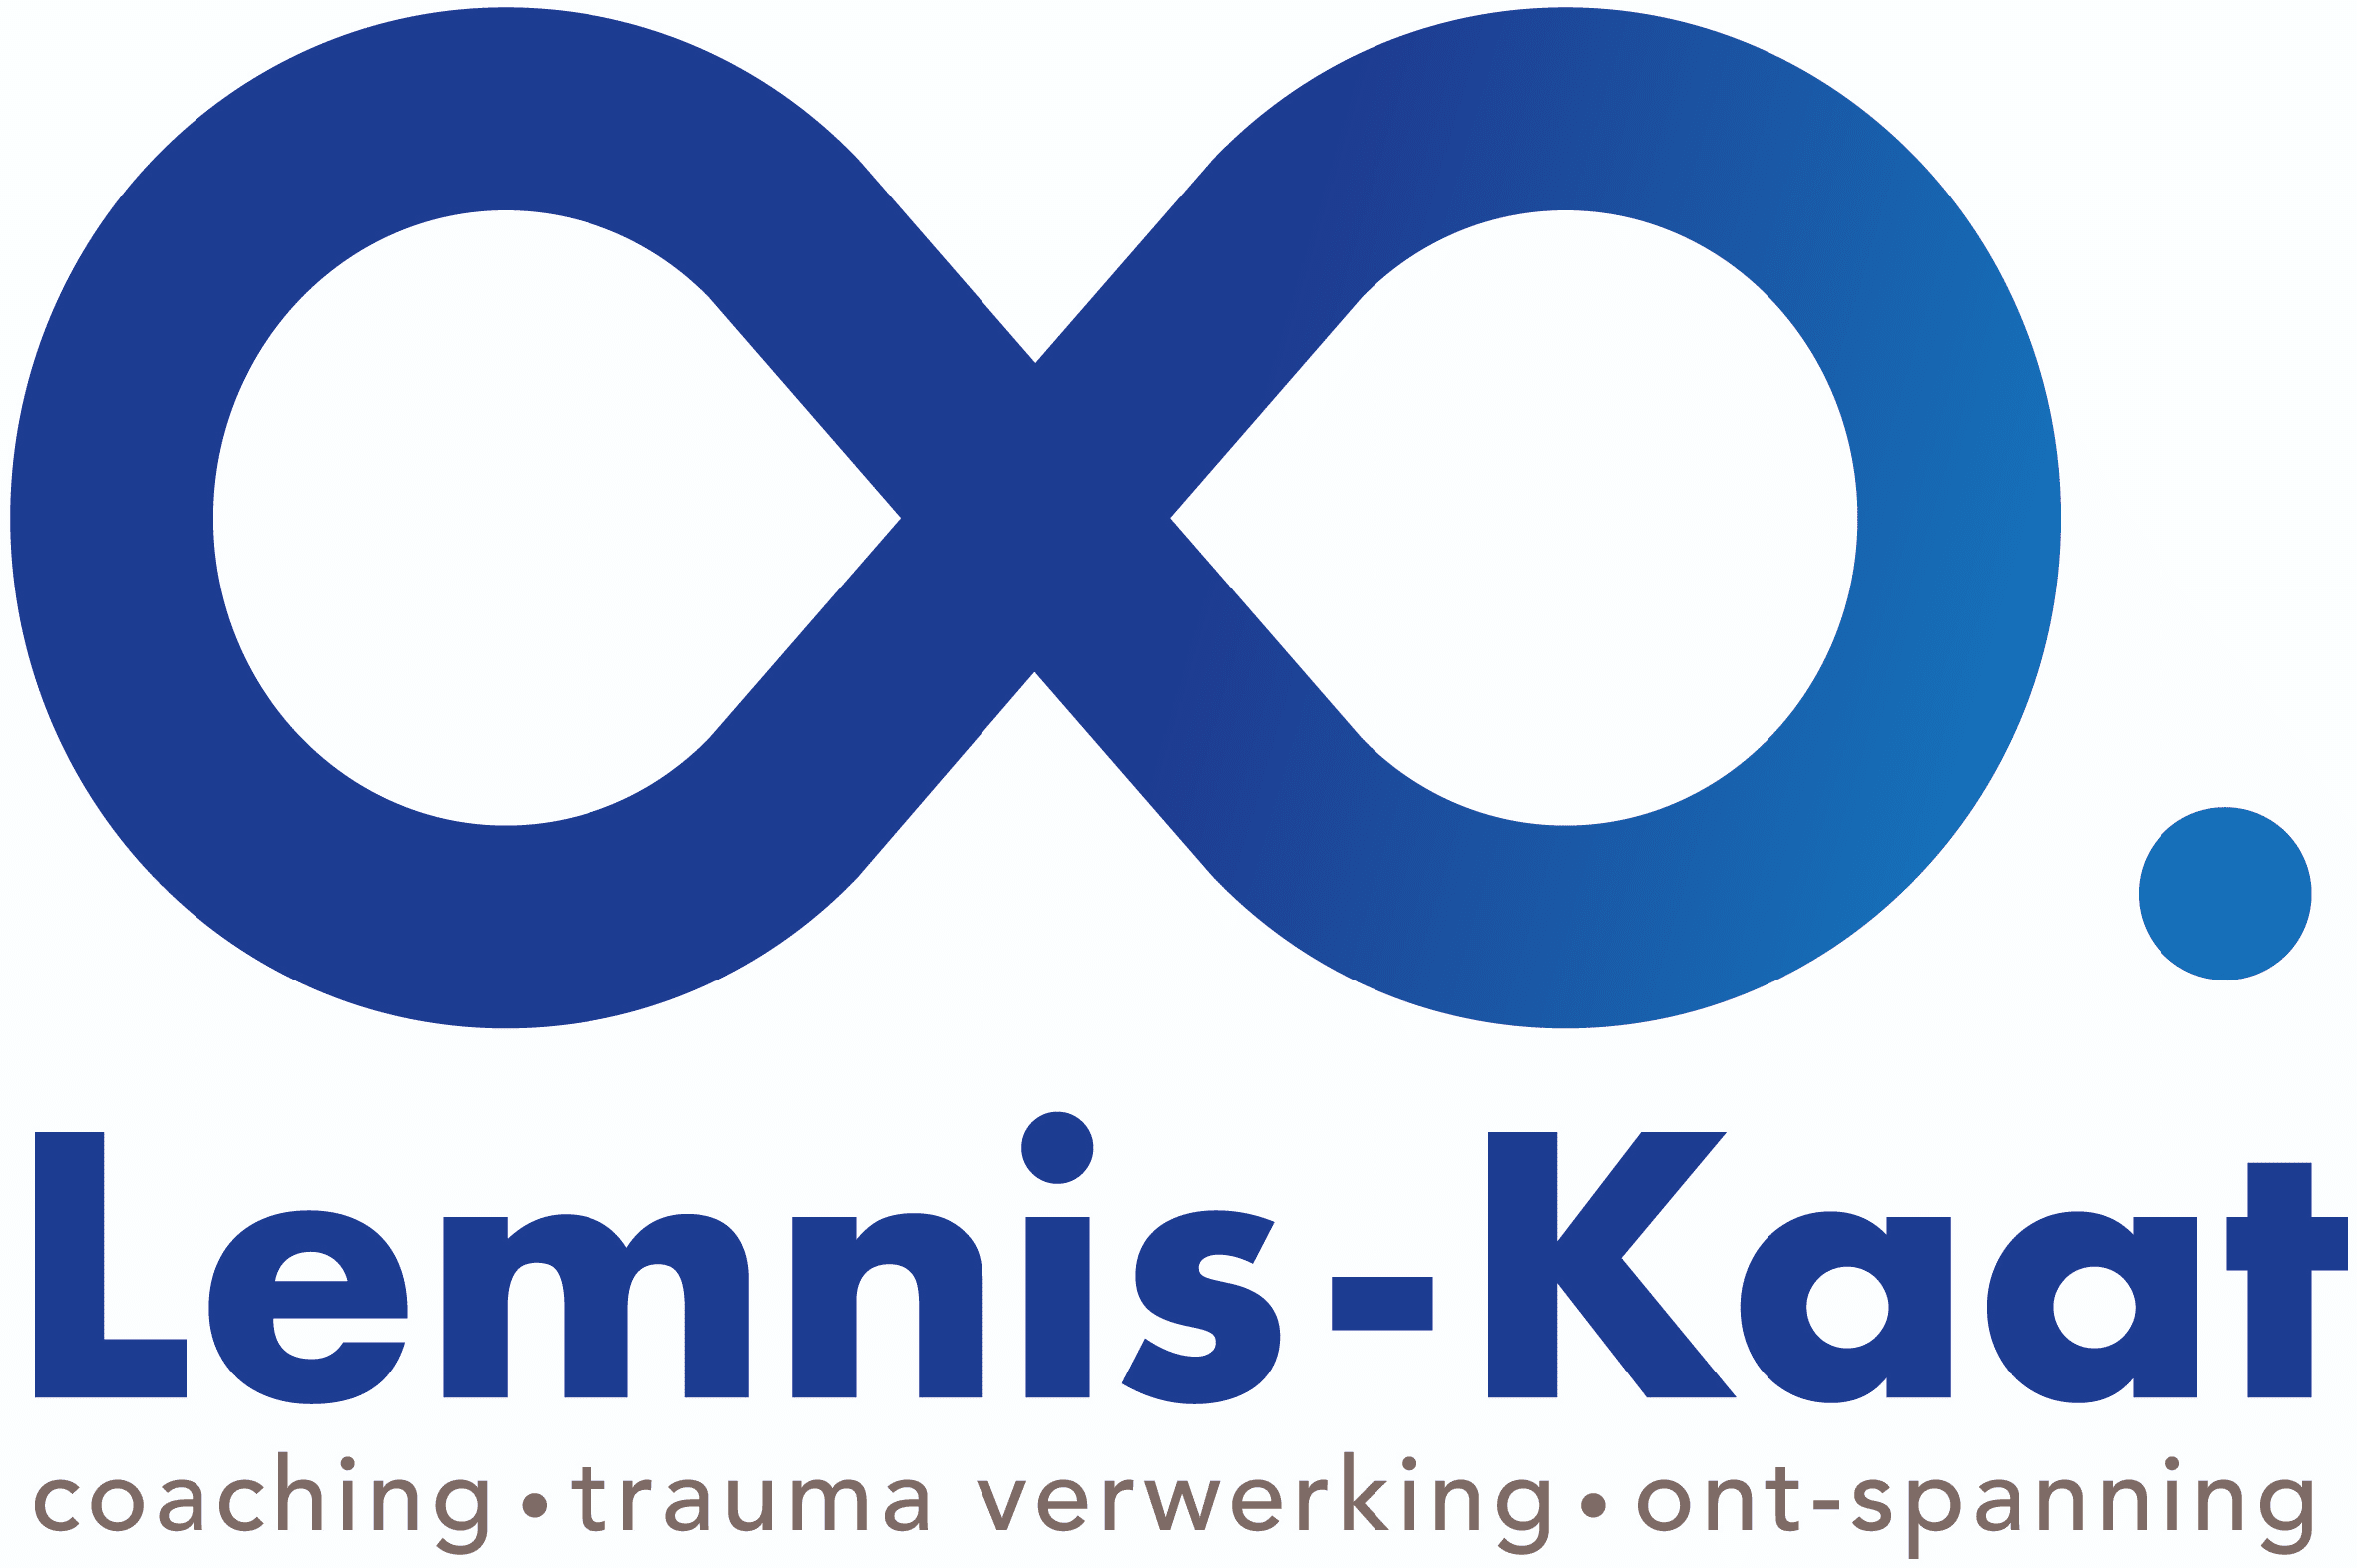 Lemnis-Kaat